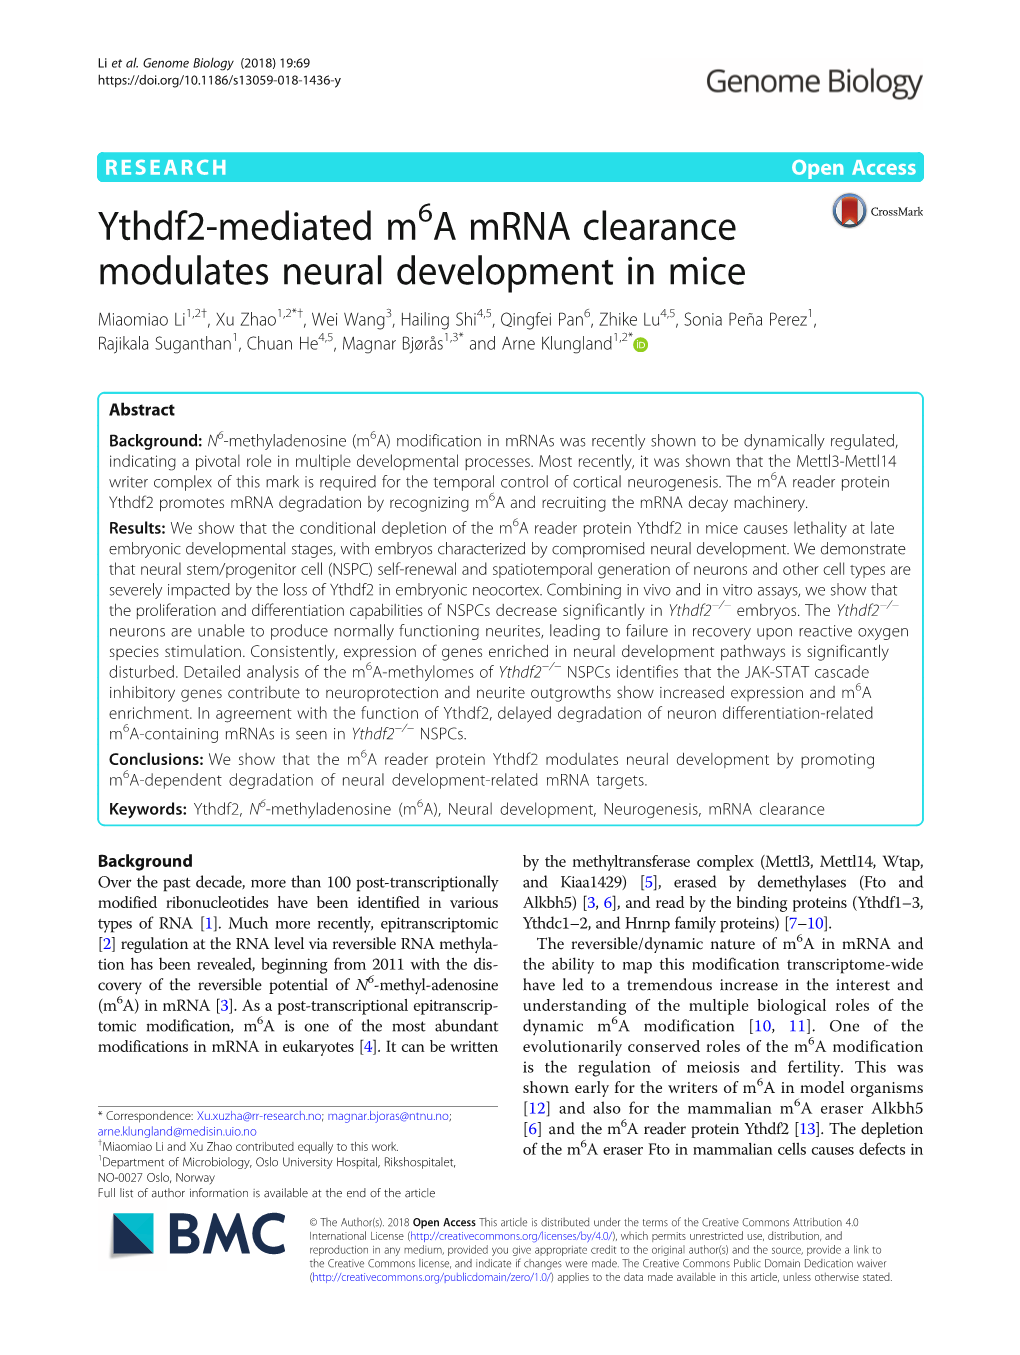 Ythdf2-Mediated M6a Mrna Clearance Modulates Neural